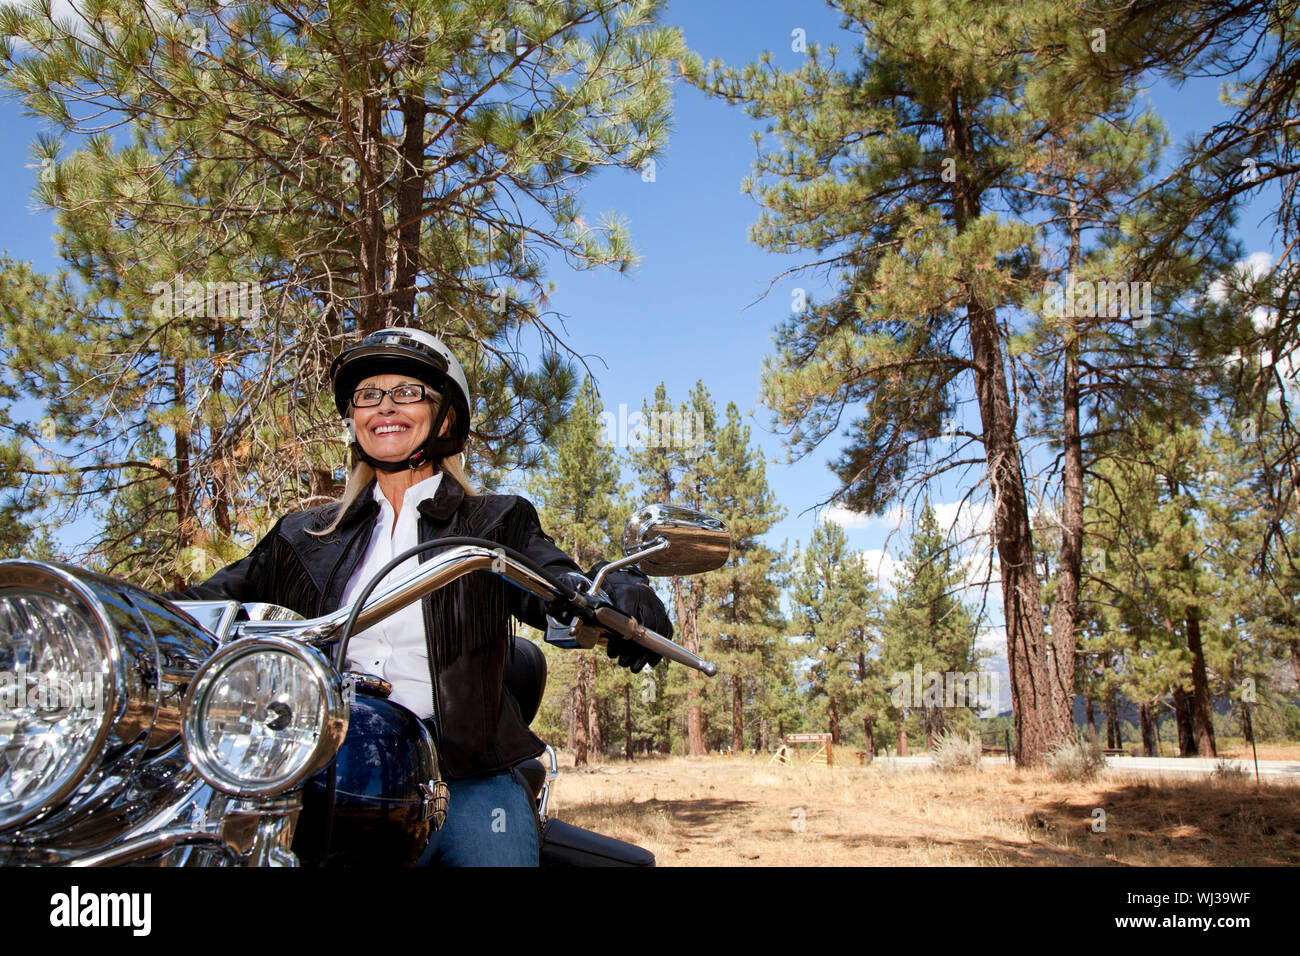 Senior woman riding motorcycle through a forest Stock Photo